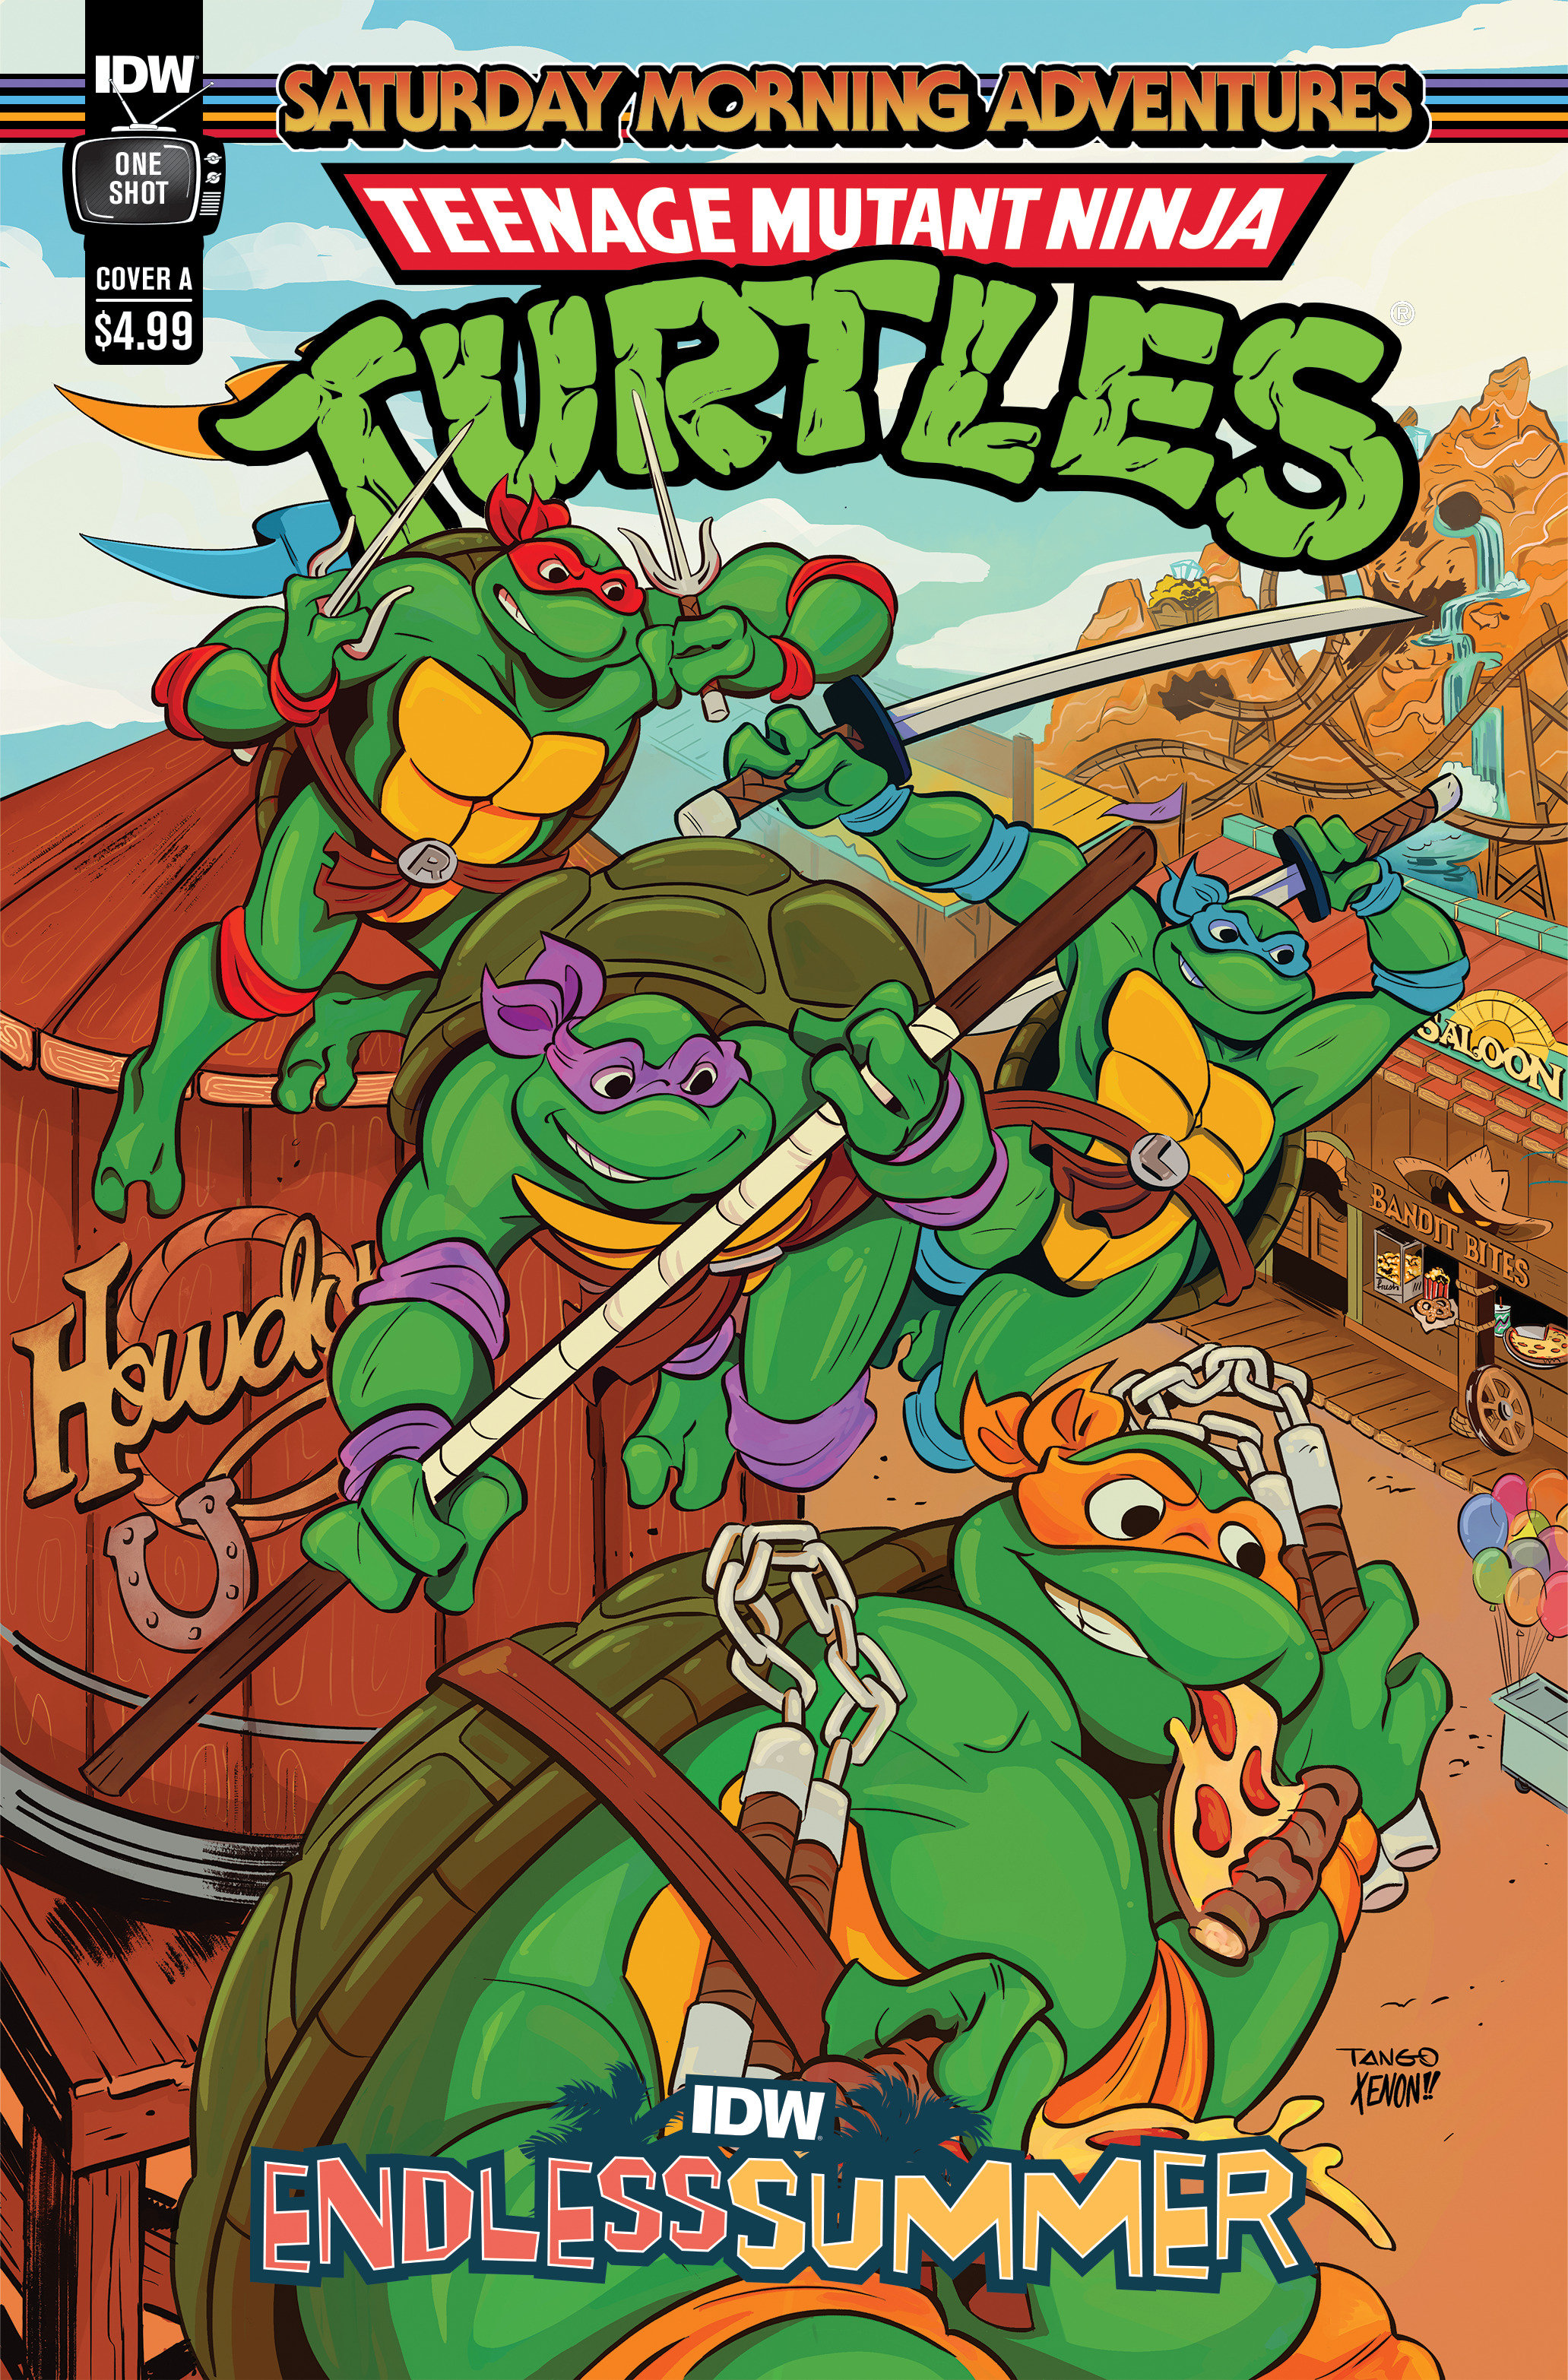 IDW Endless Summer—Teenage Mutant Ninja Turtles Saturday Morning Adventures Cover A Tango